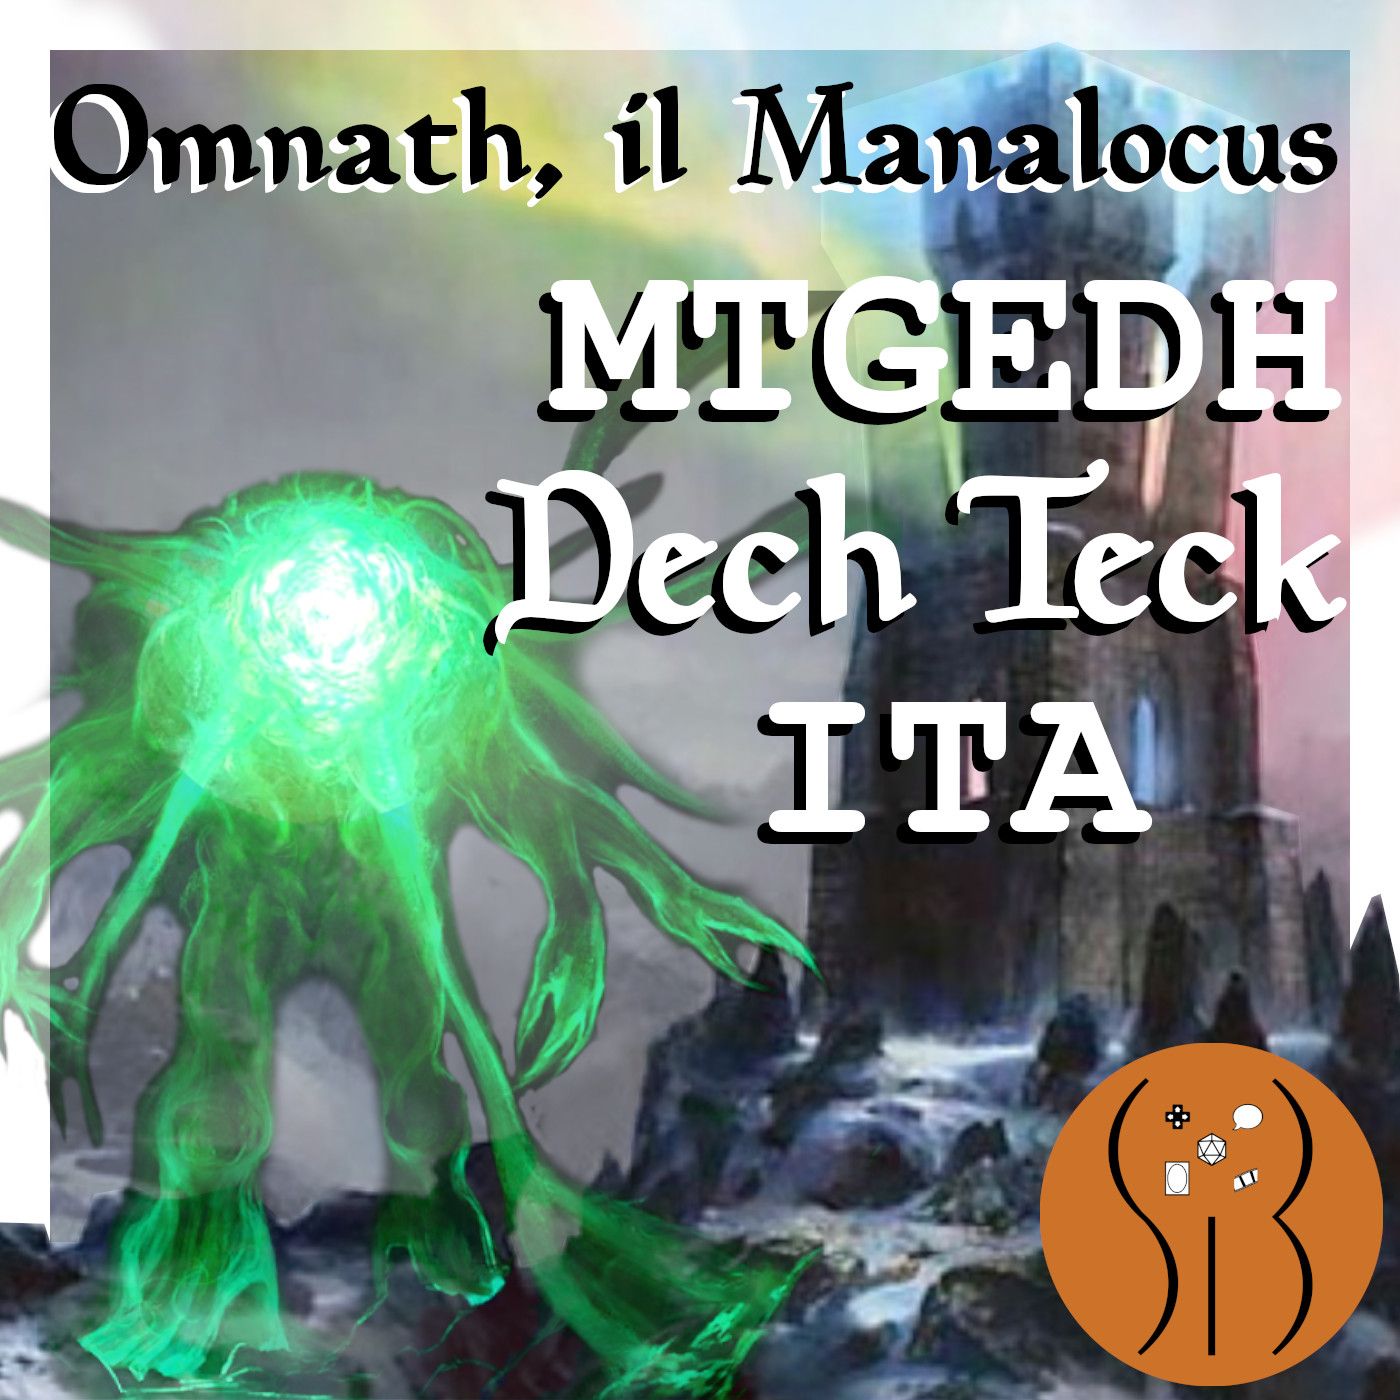 Omnath il Manalocus MTGEDH deck tech ITA